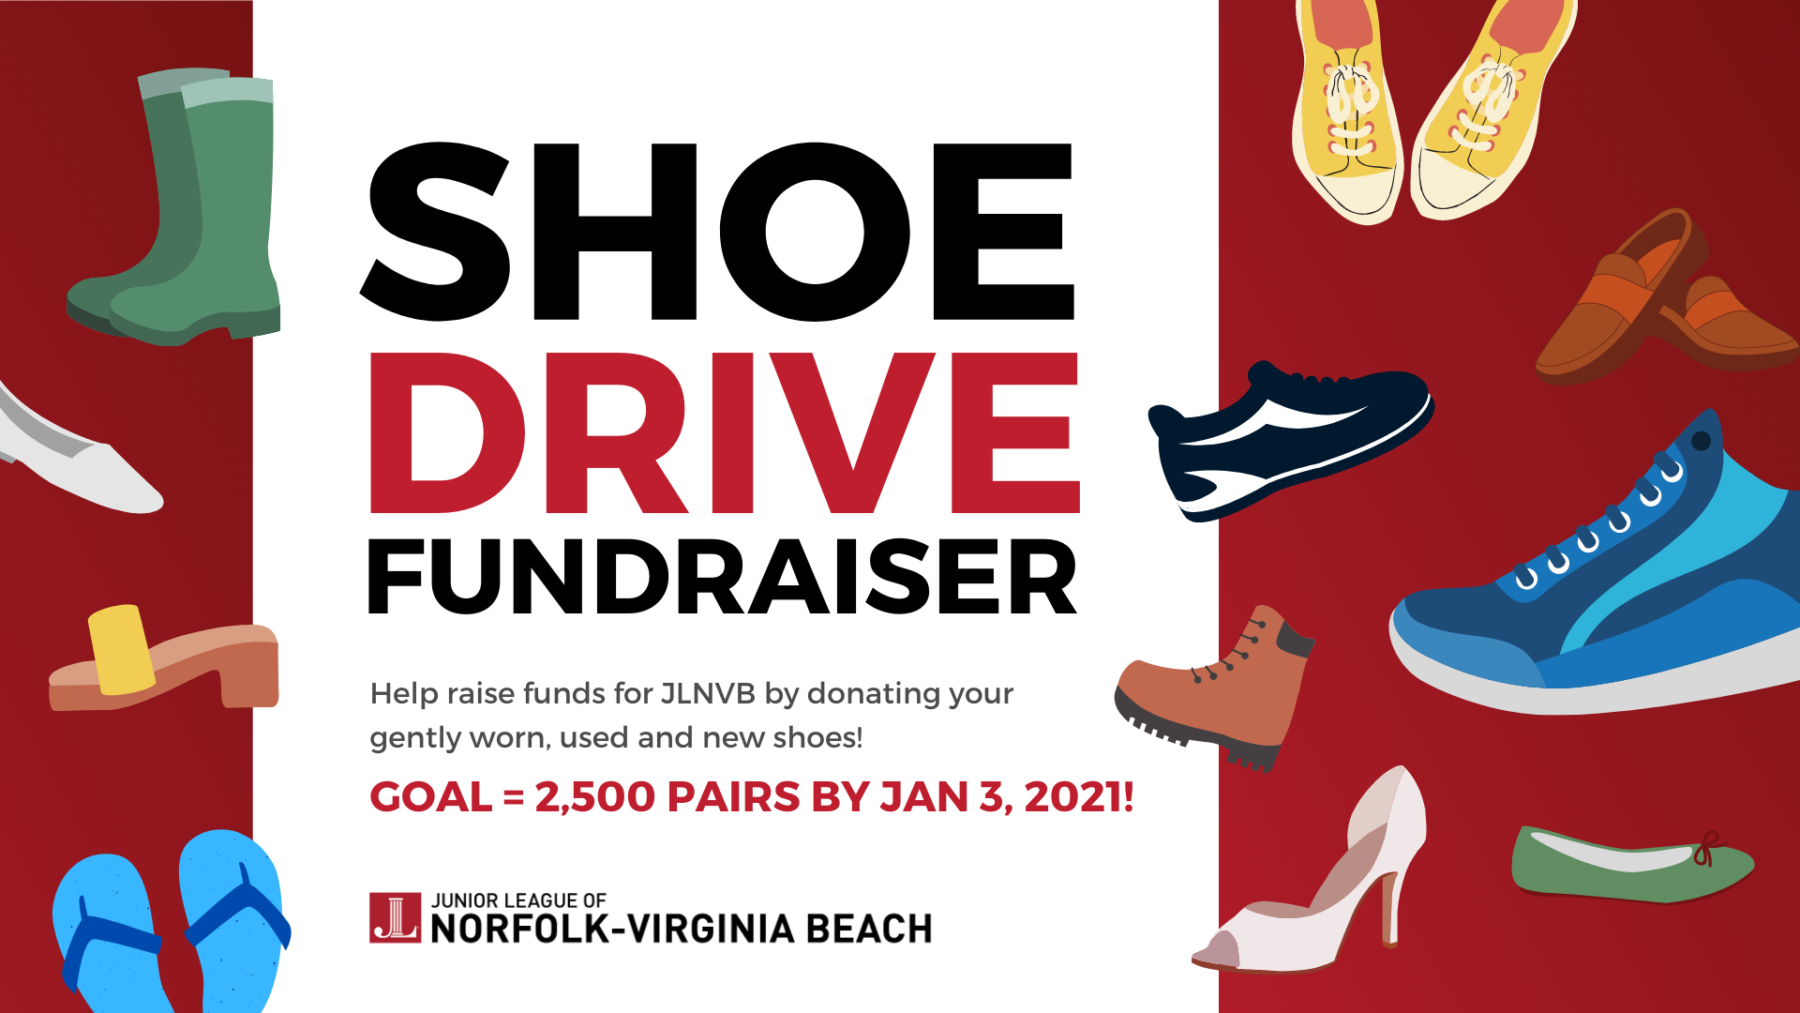 Shoe Drive Fundraiser - Junior League of Norfolk-Virginia Beach